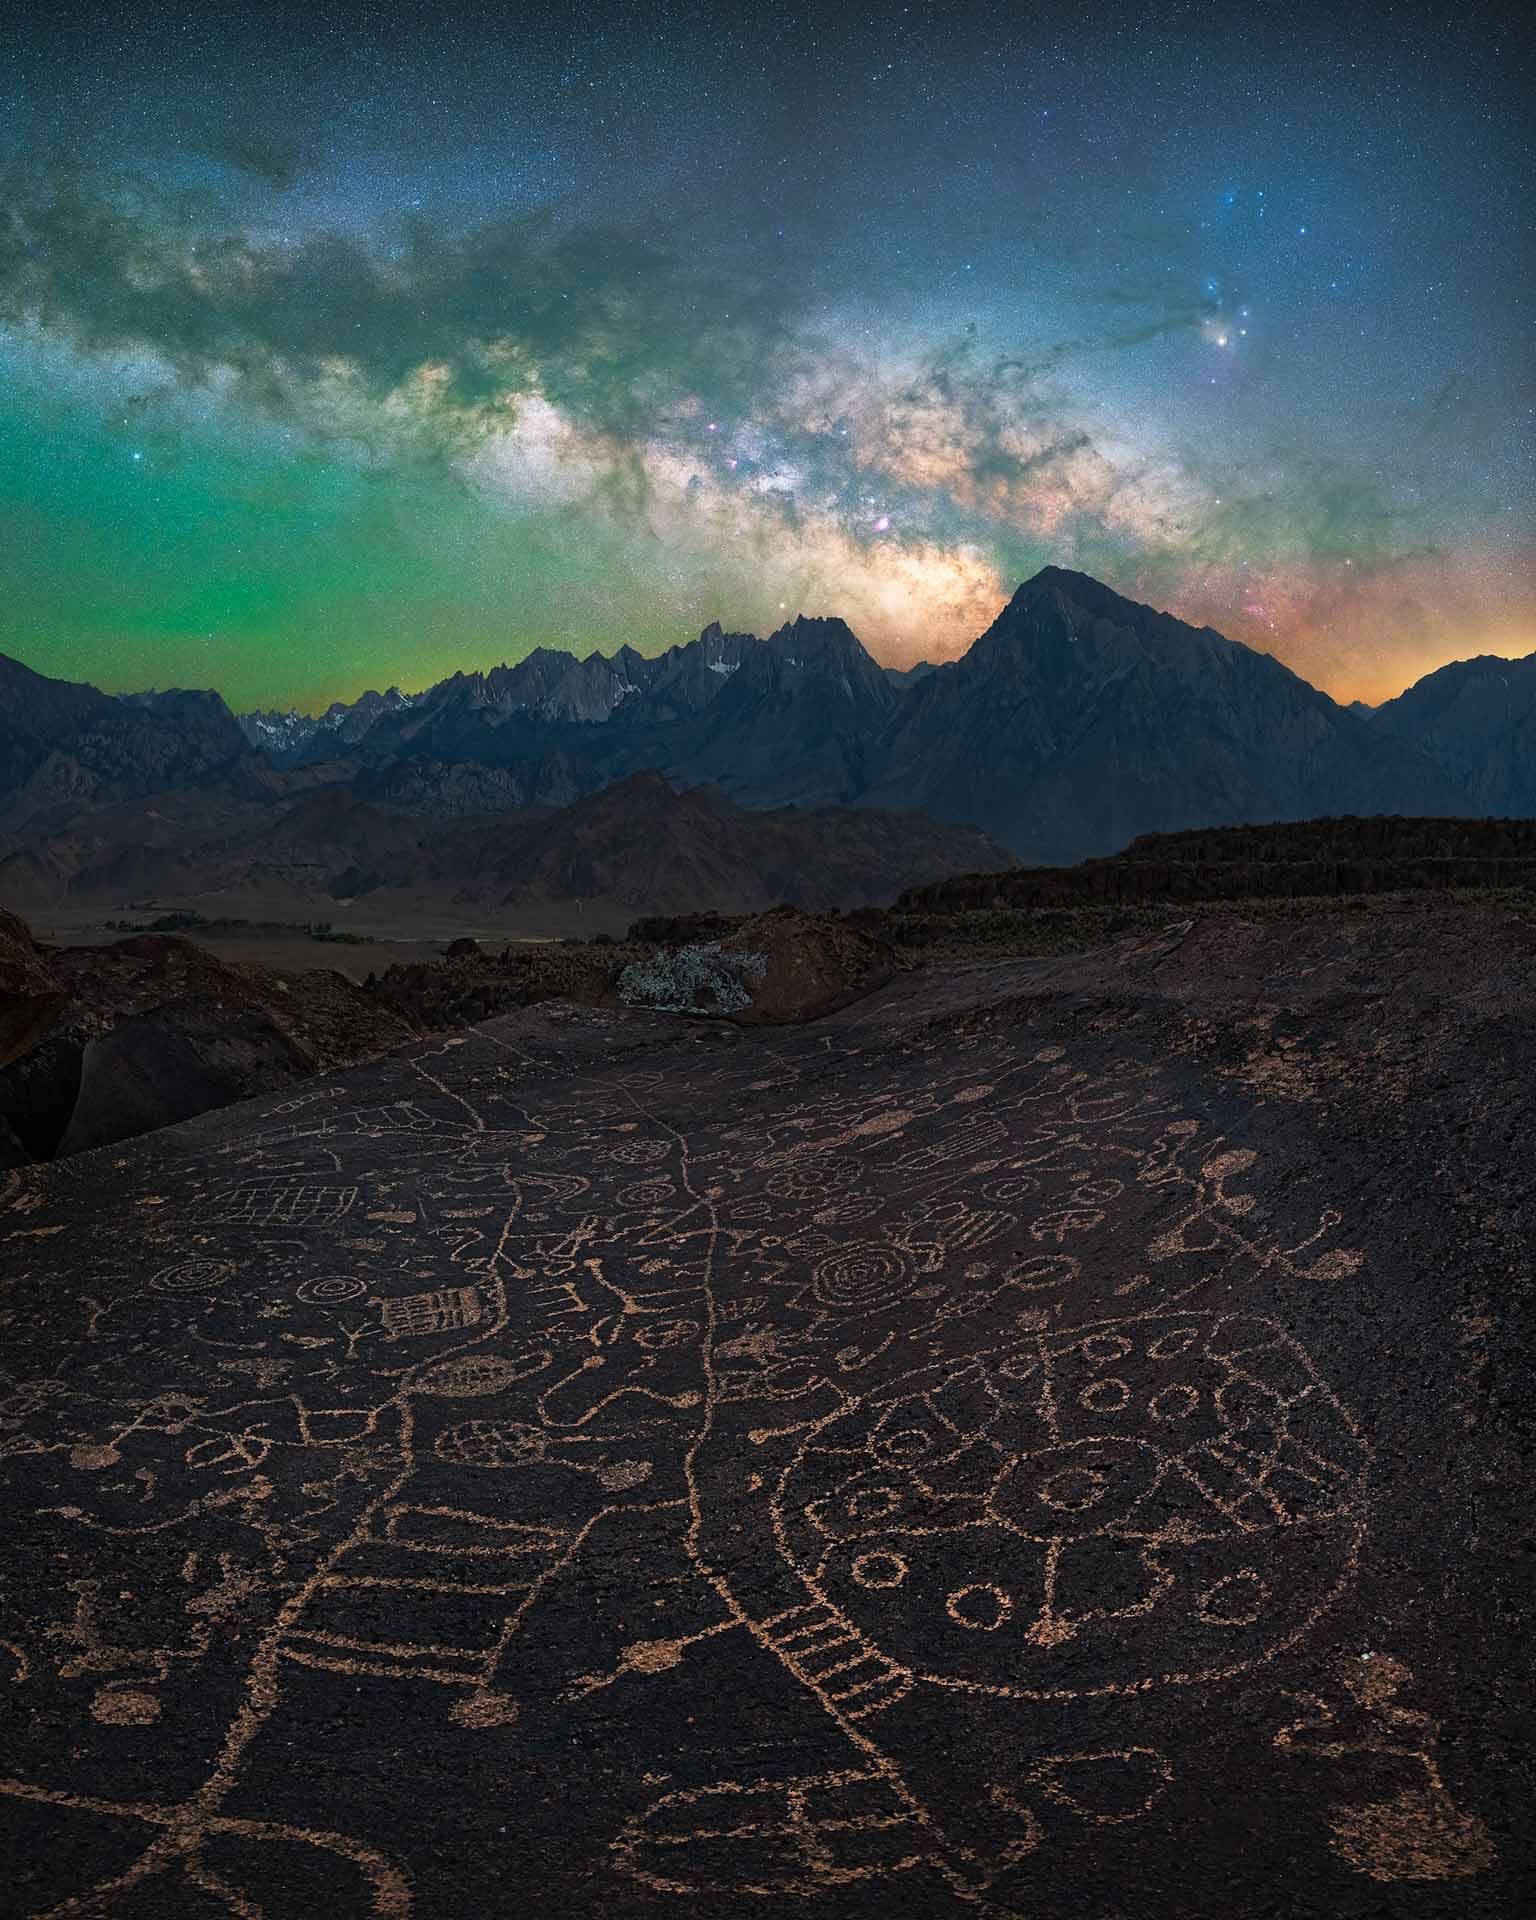 Native American petroglyphs under the Milky Way. (Photo: Marcin Zajac)